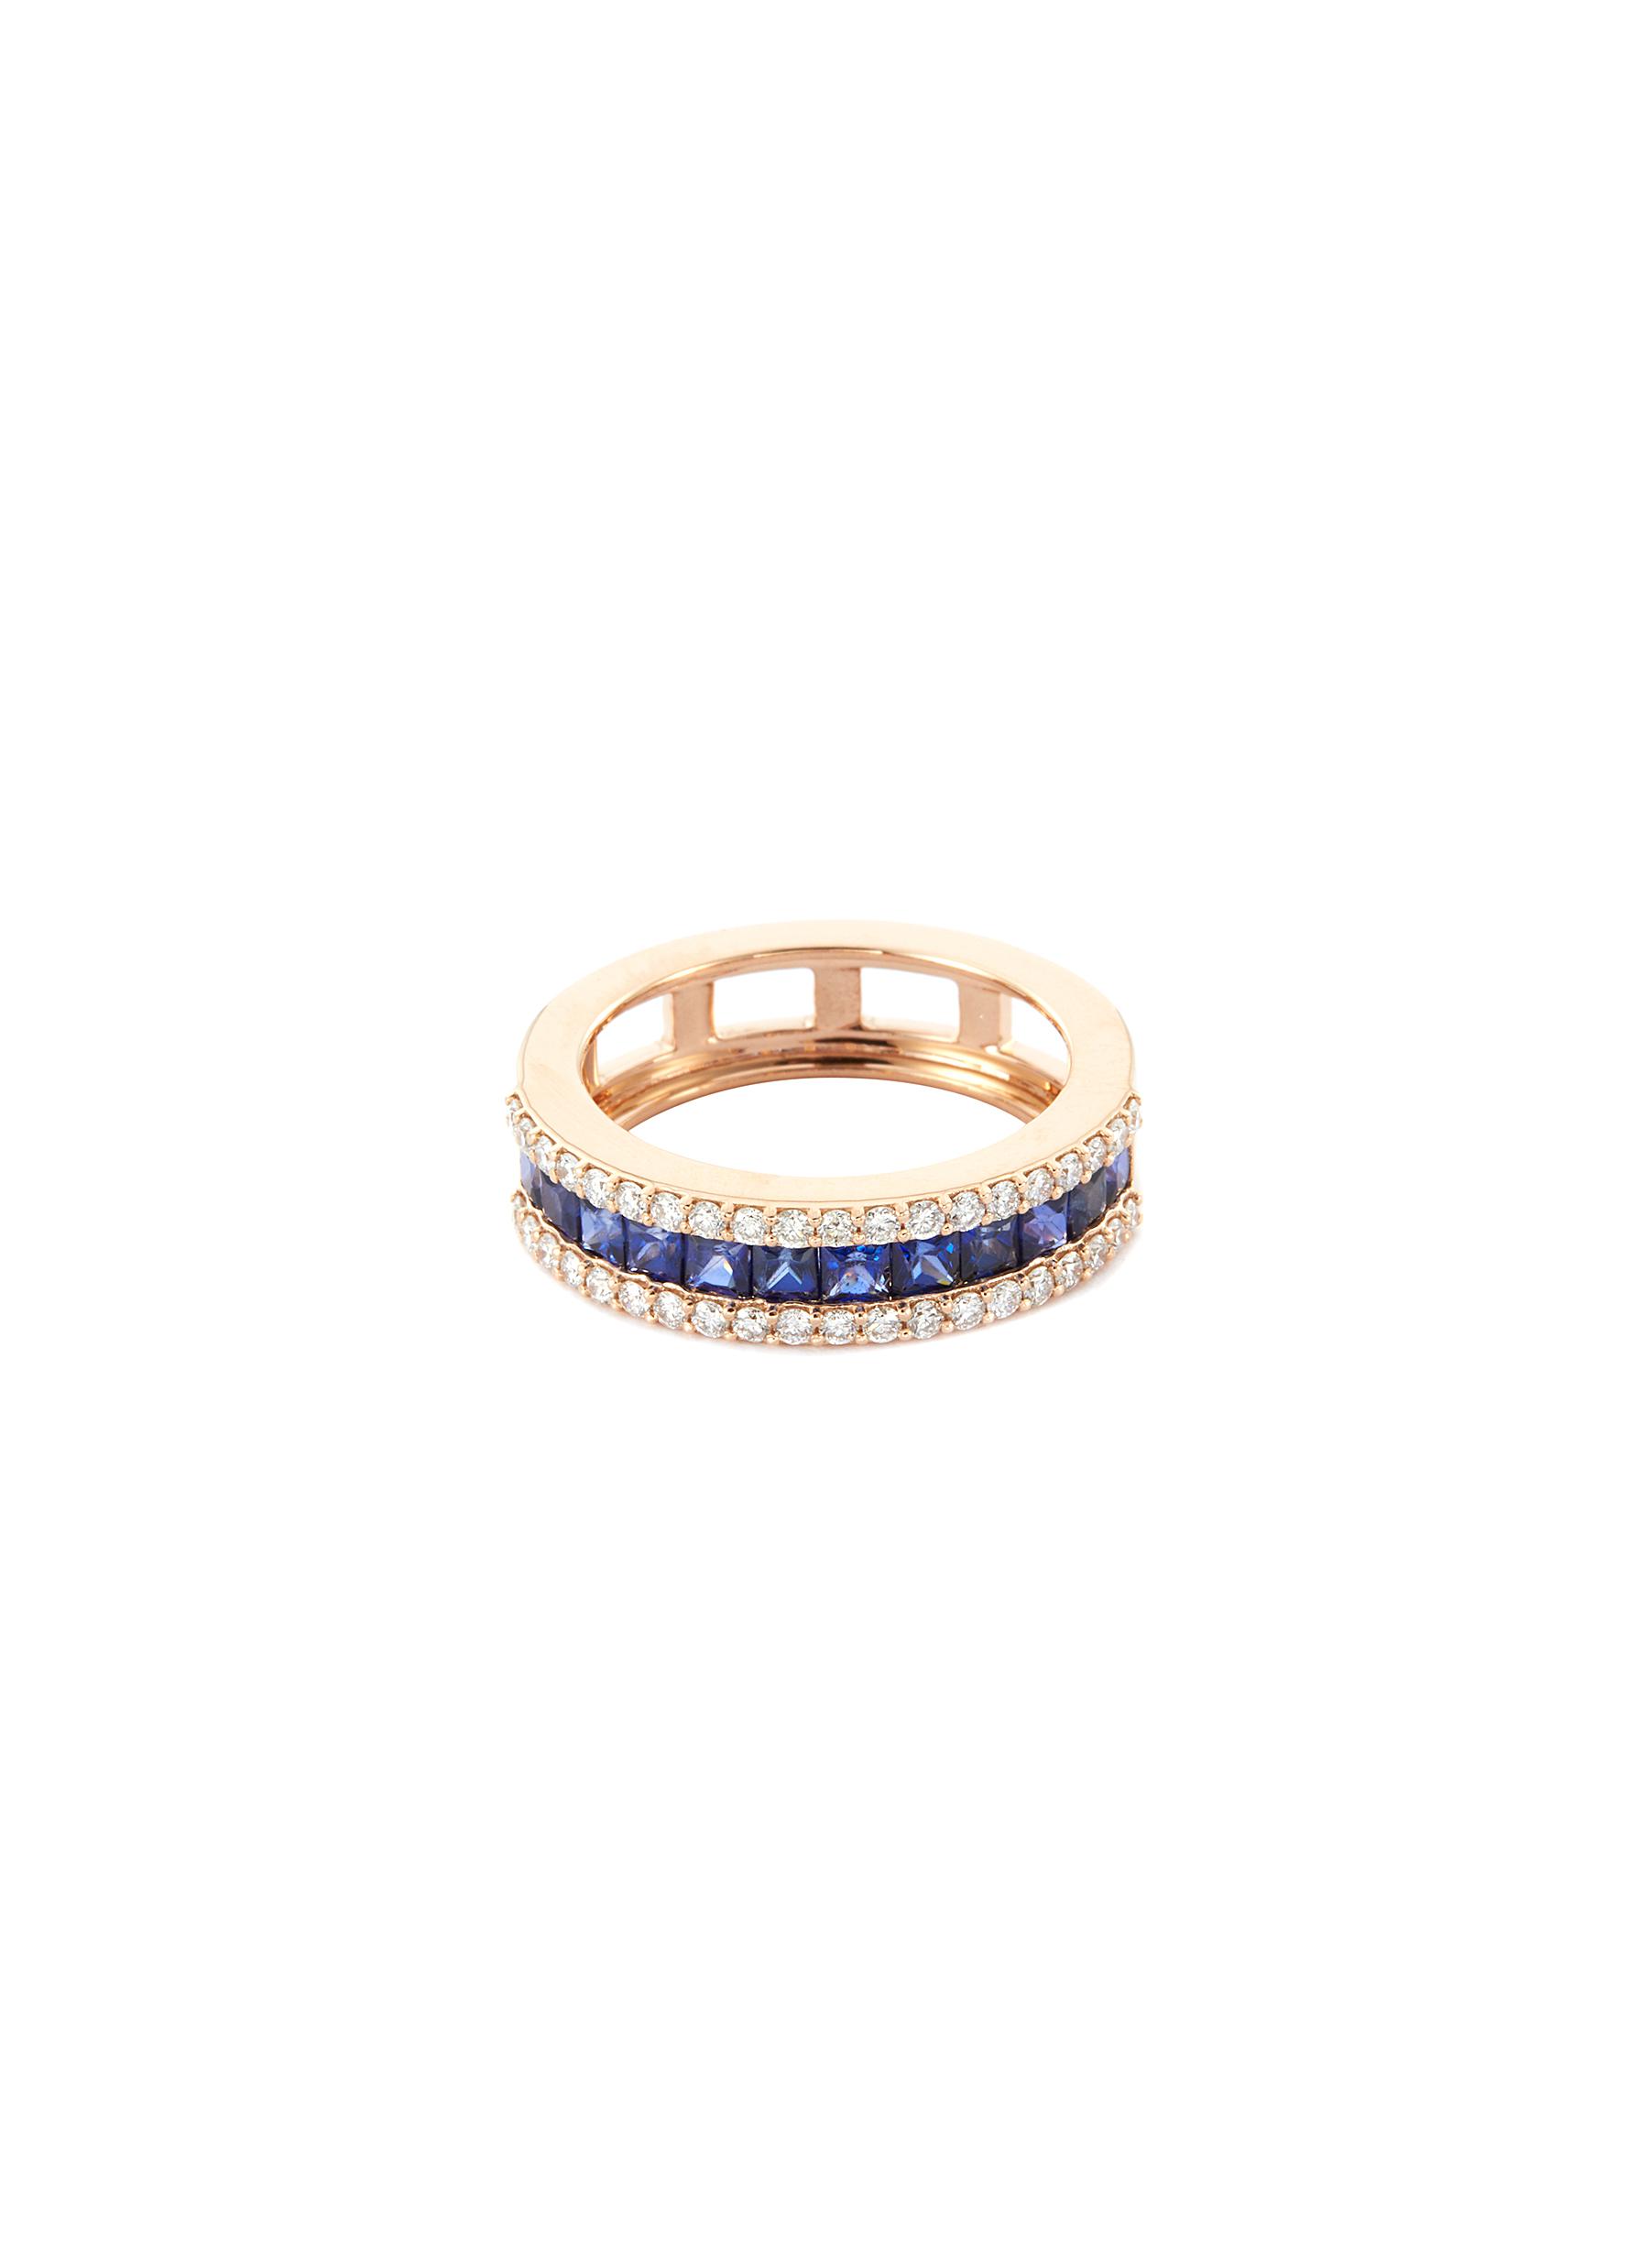 BEE GODDESS 'Mondrian' Diamond Sapphire 14k Gold Ring